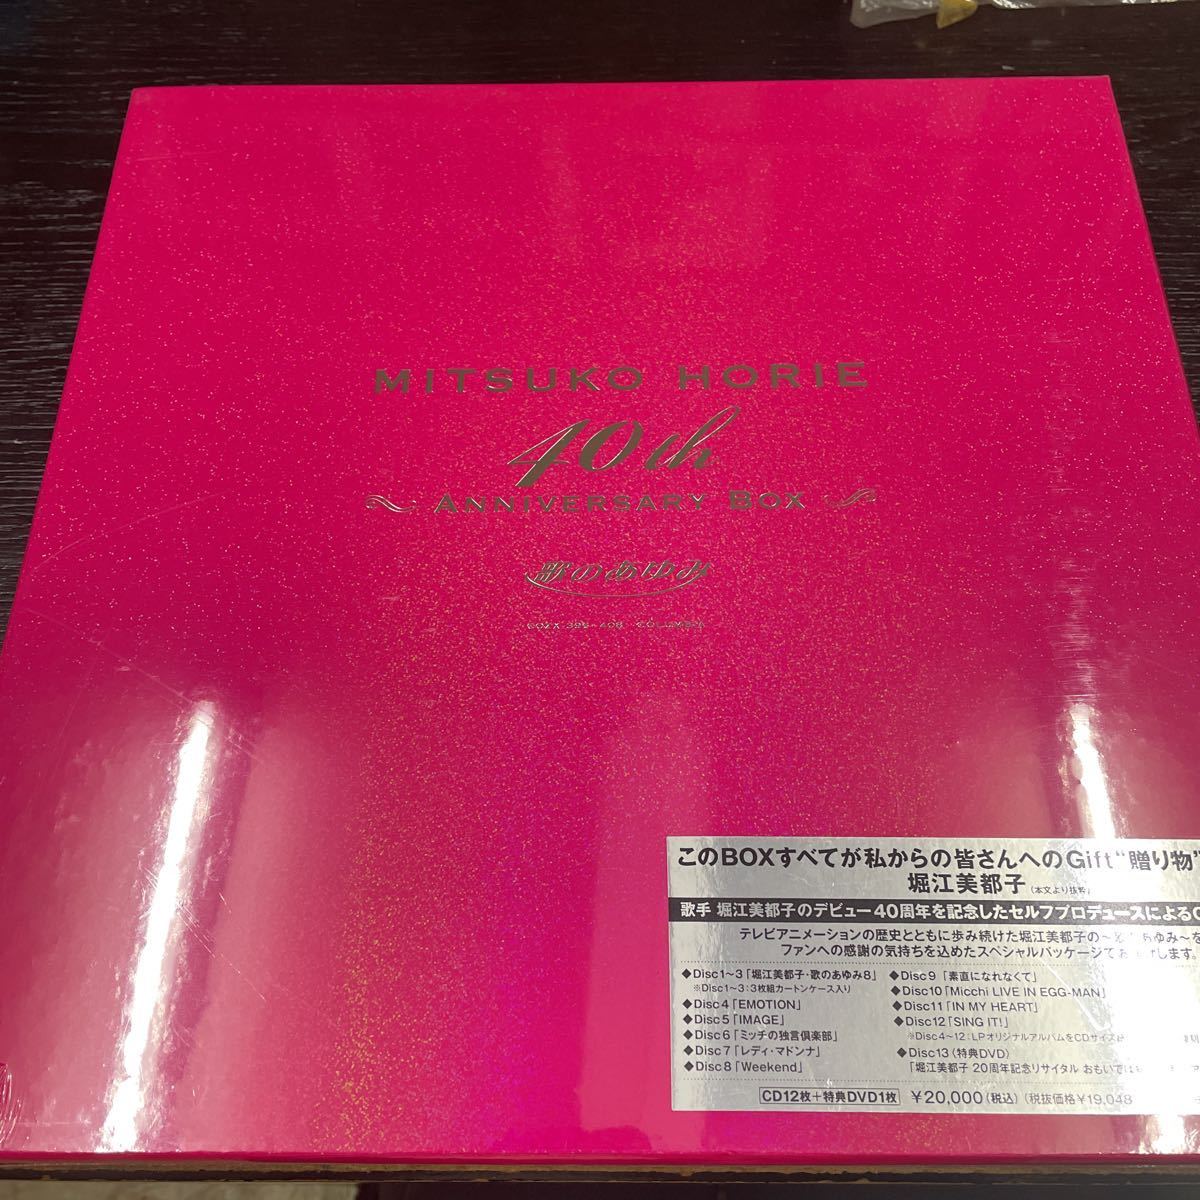 CD12 листов + привилегия DVD1 листов Хориэ Мицуко 40th anniversary BOX.. ...